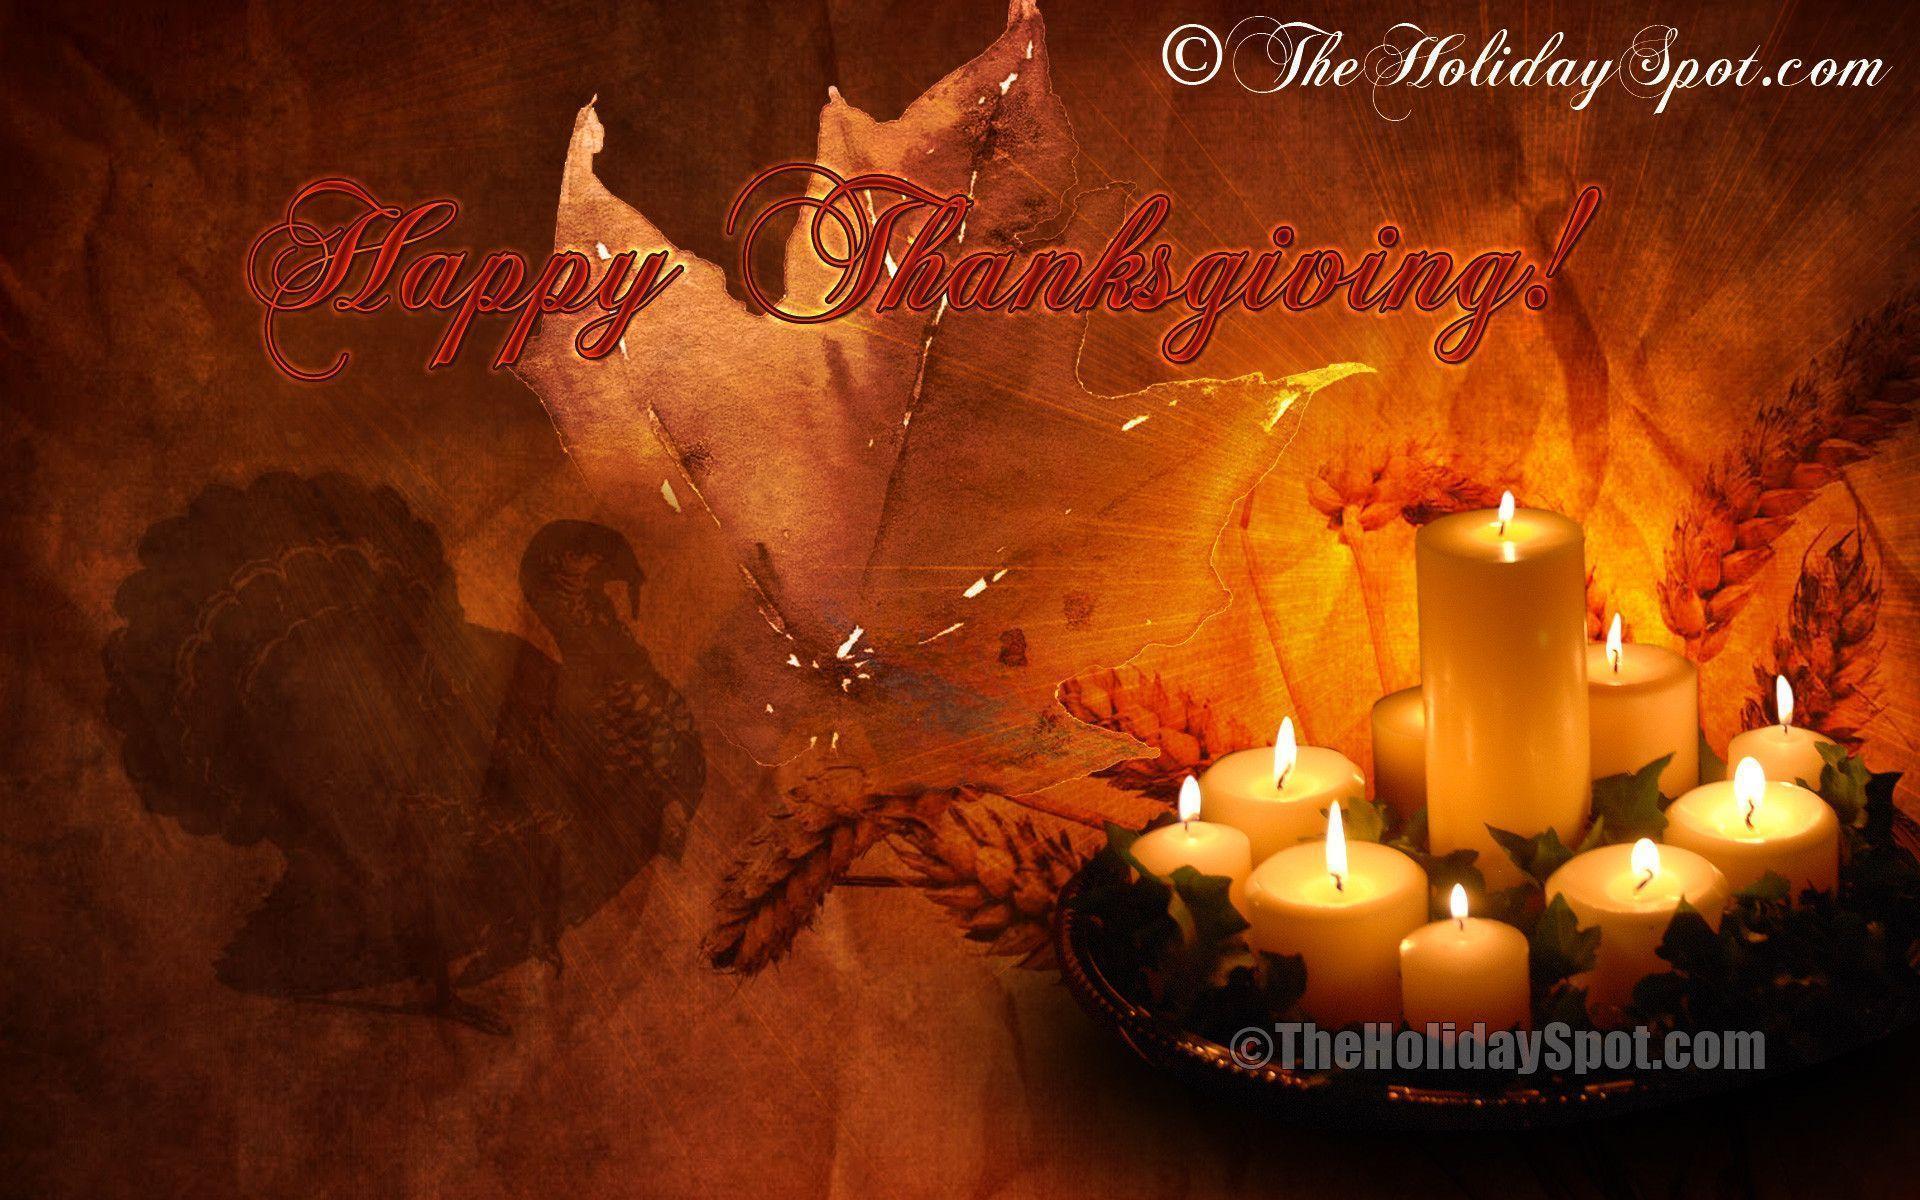 Happy Thanksgiving 2012 wallpaper